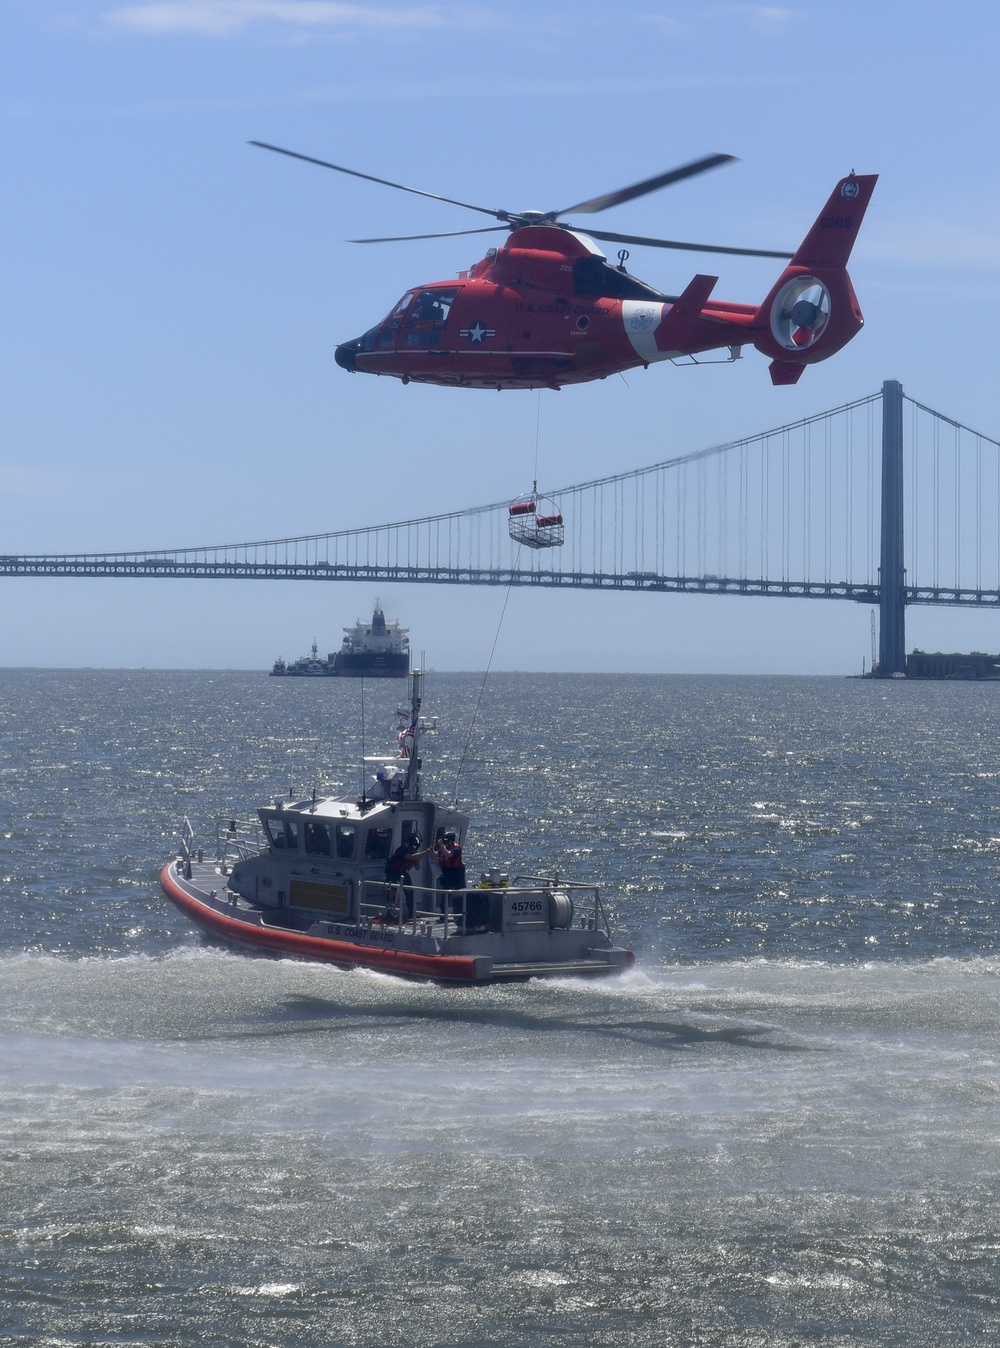 Coast Guard demonstrates Rescue at Fleet Week 2019